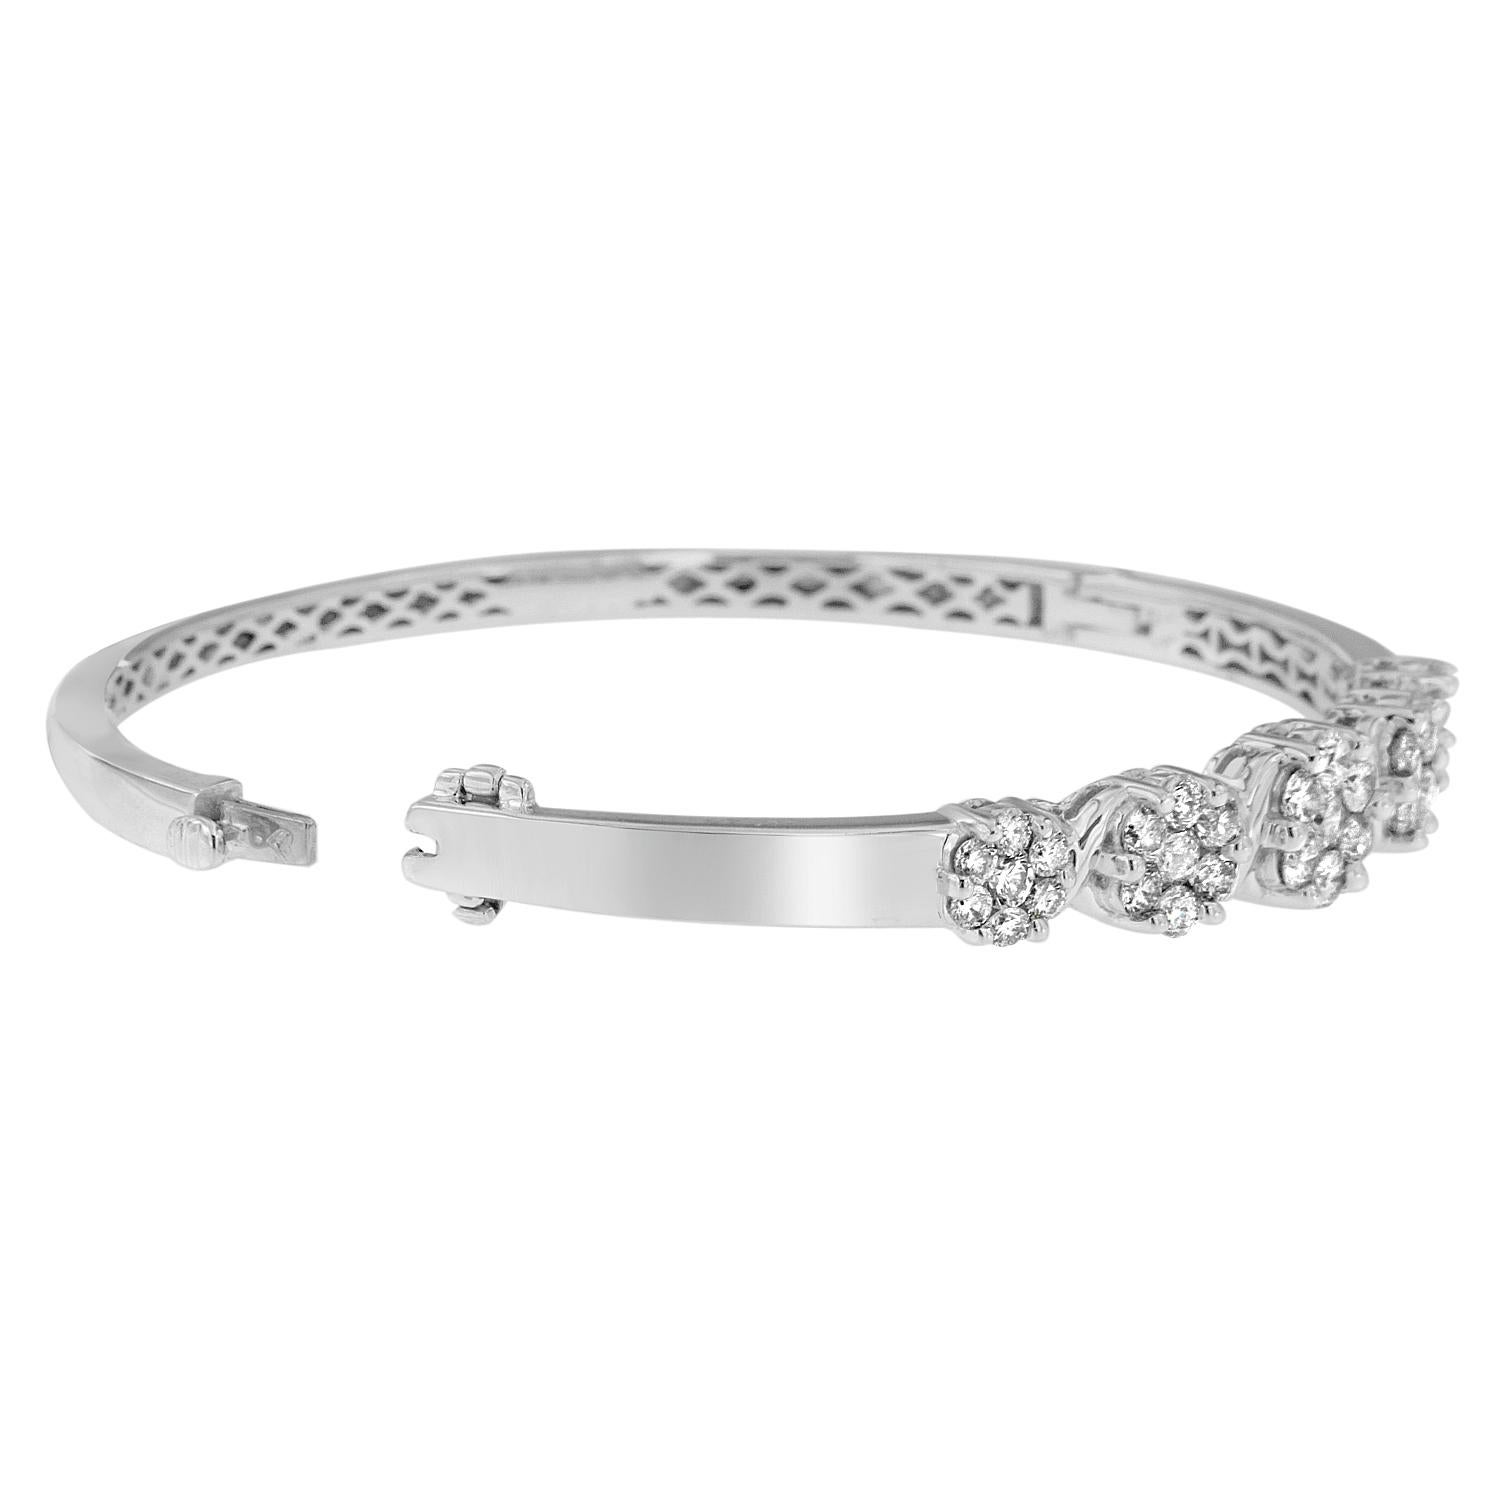 Contemporary 14K White Gold 2 1/2 Carat Diamond Floral Bangle Bracelet